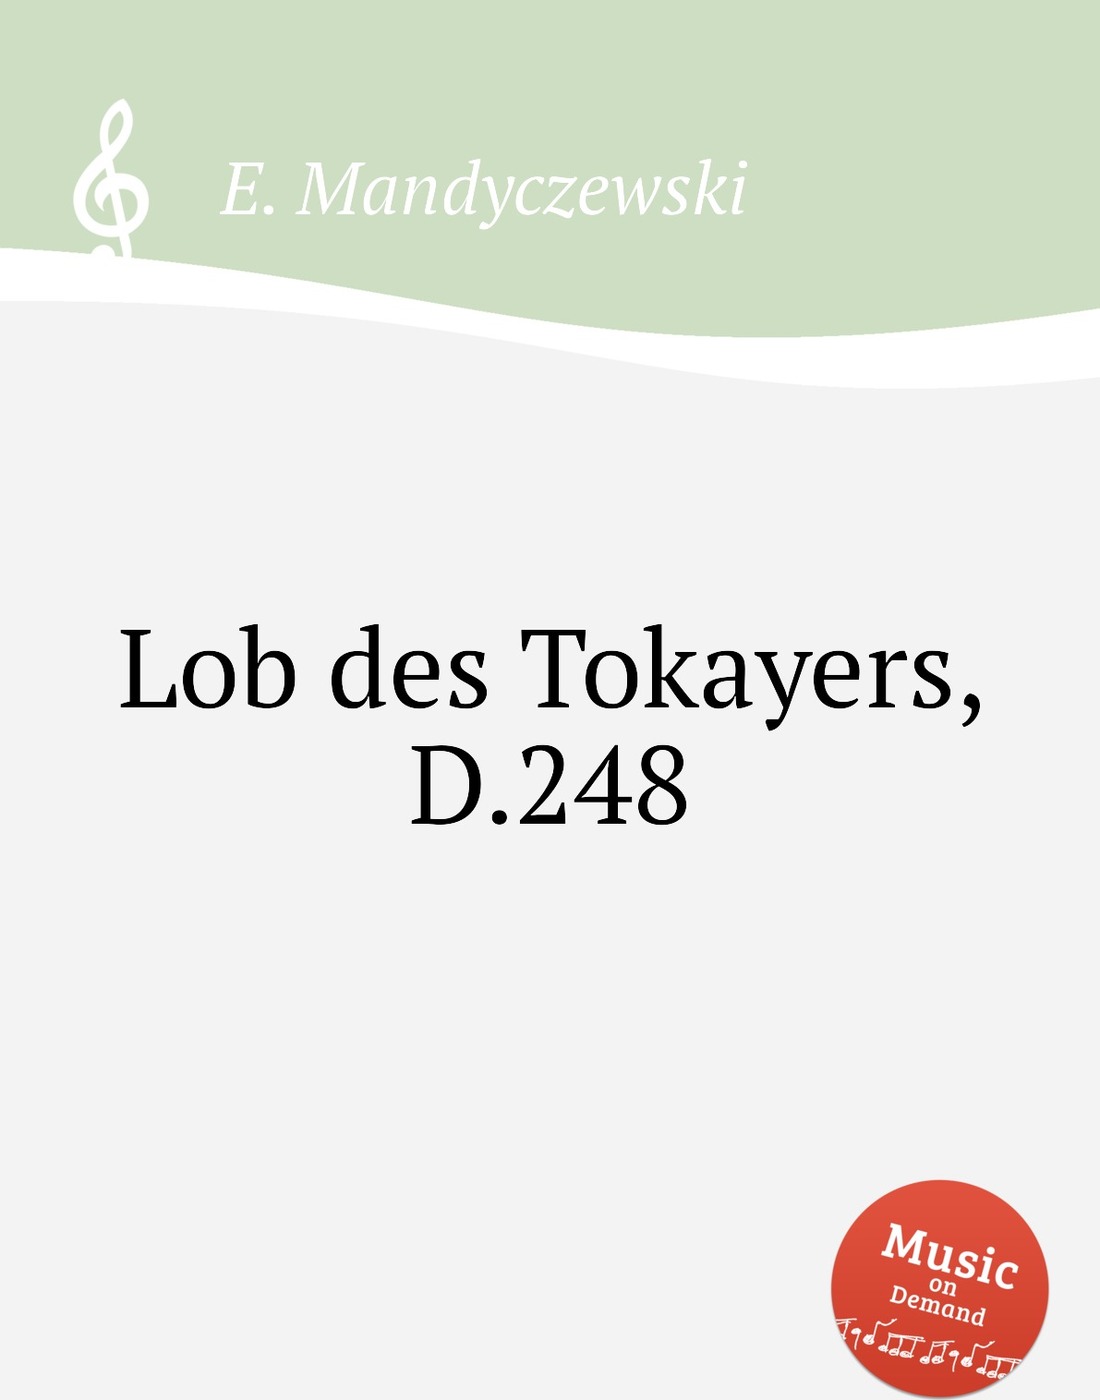 Книга "Lob des Tokayers, D.248" - купить книгу ISBN 97858847